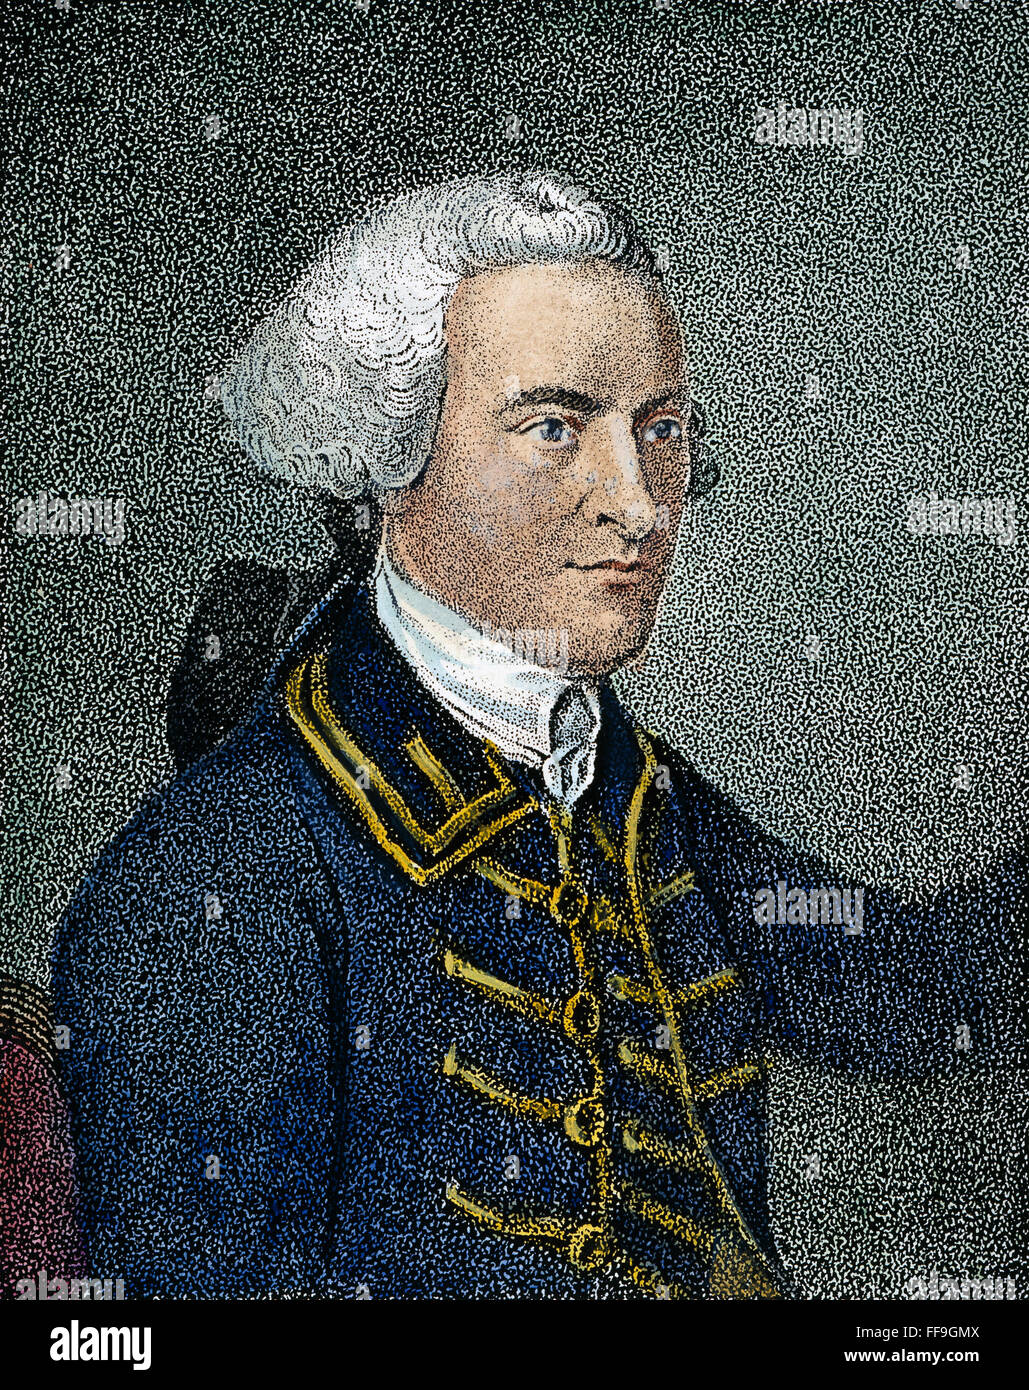 JOHN HANCOCK (1737-1793). /nAmerican revolutionary politician. Aquatint engraving, 1820, by J.B. Longacre, after John Singleton Copley's portrait of 1765. Stock Photo